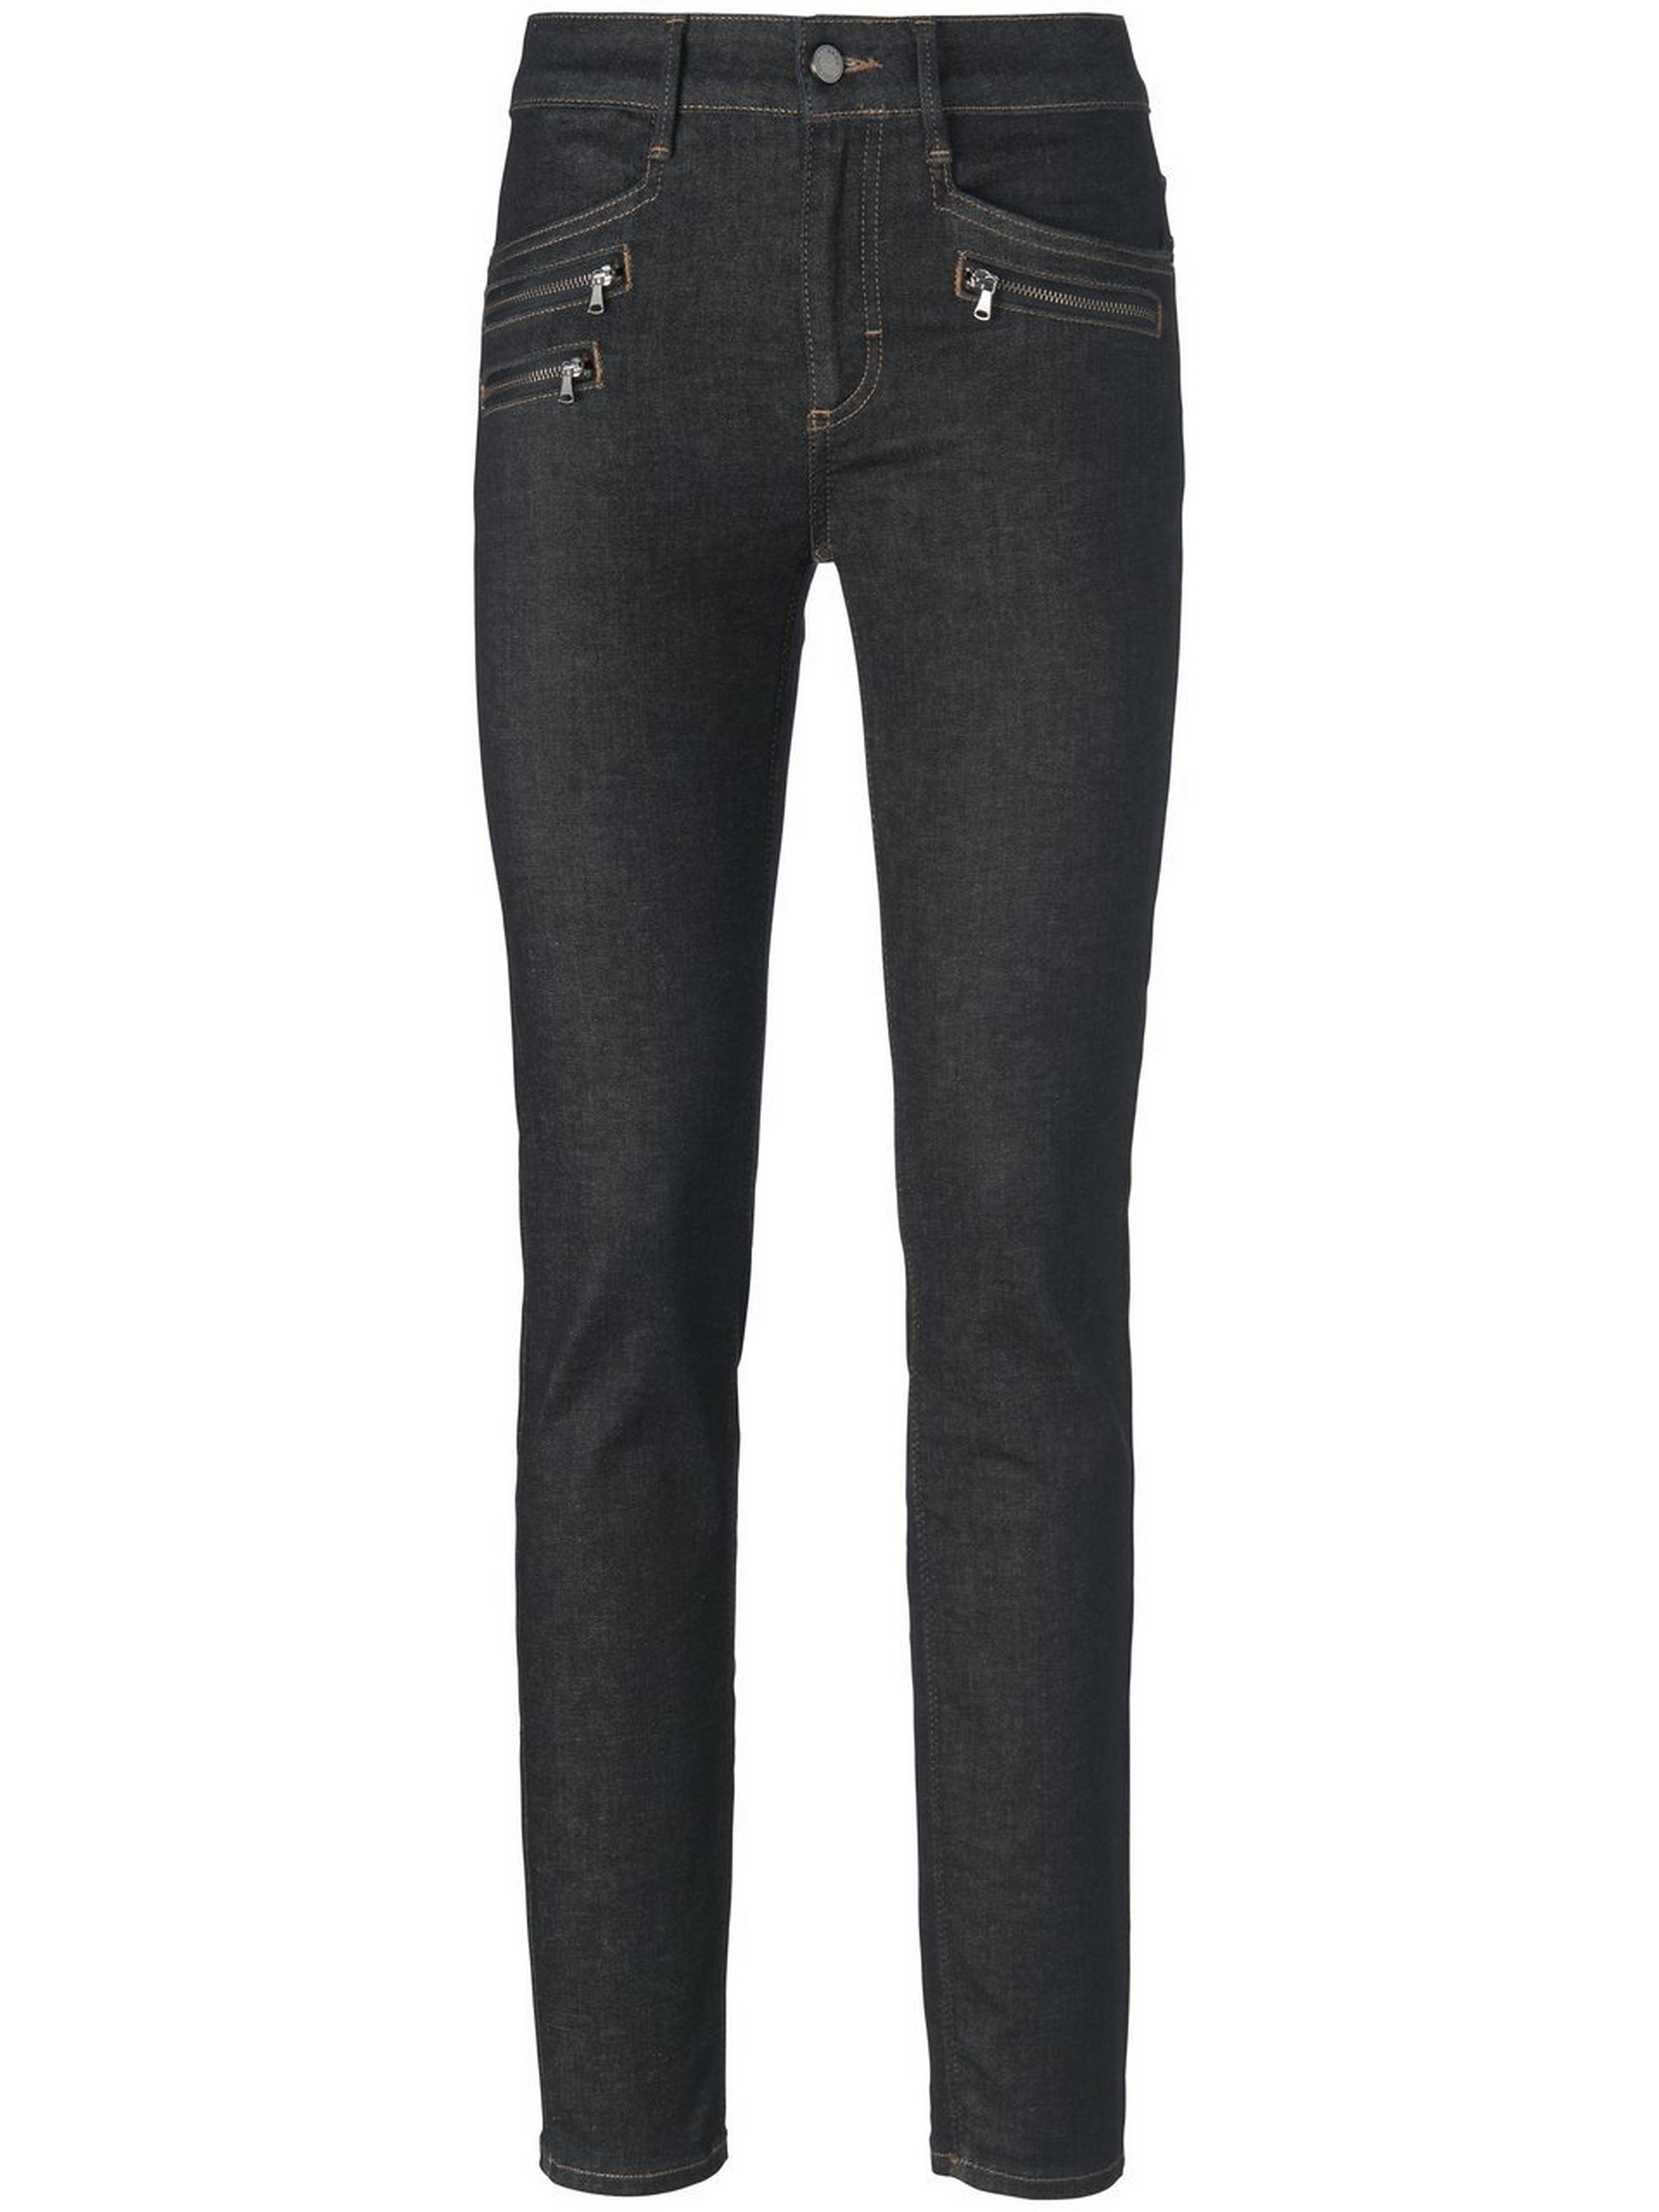 Skinny jeans model Ana Van Brax Feel Good denim